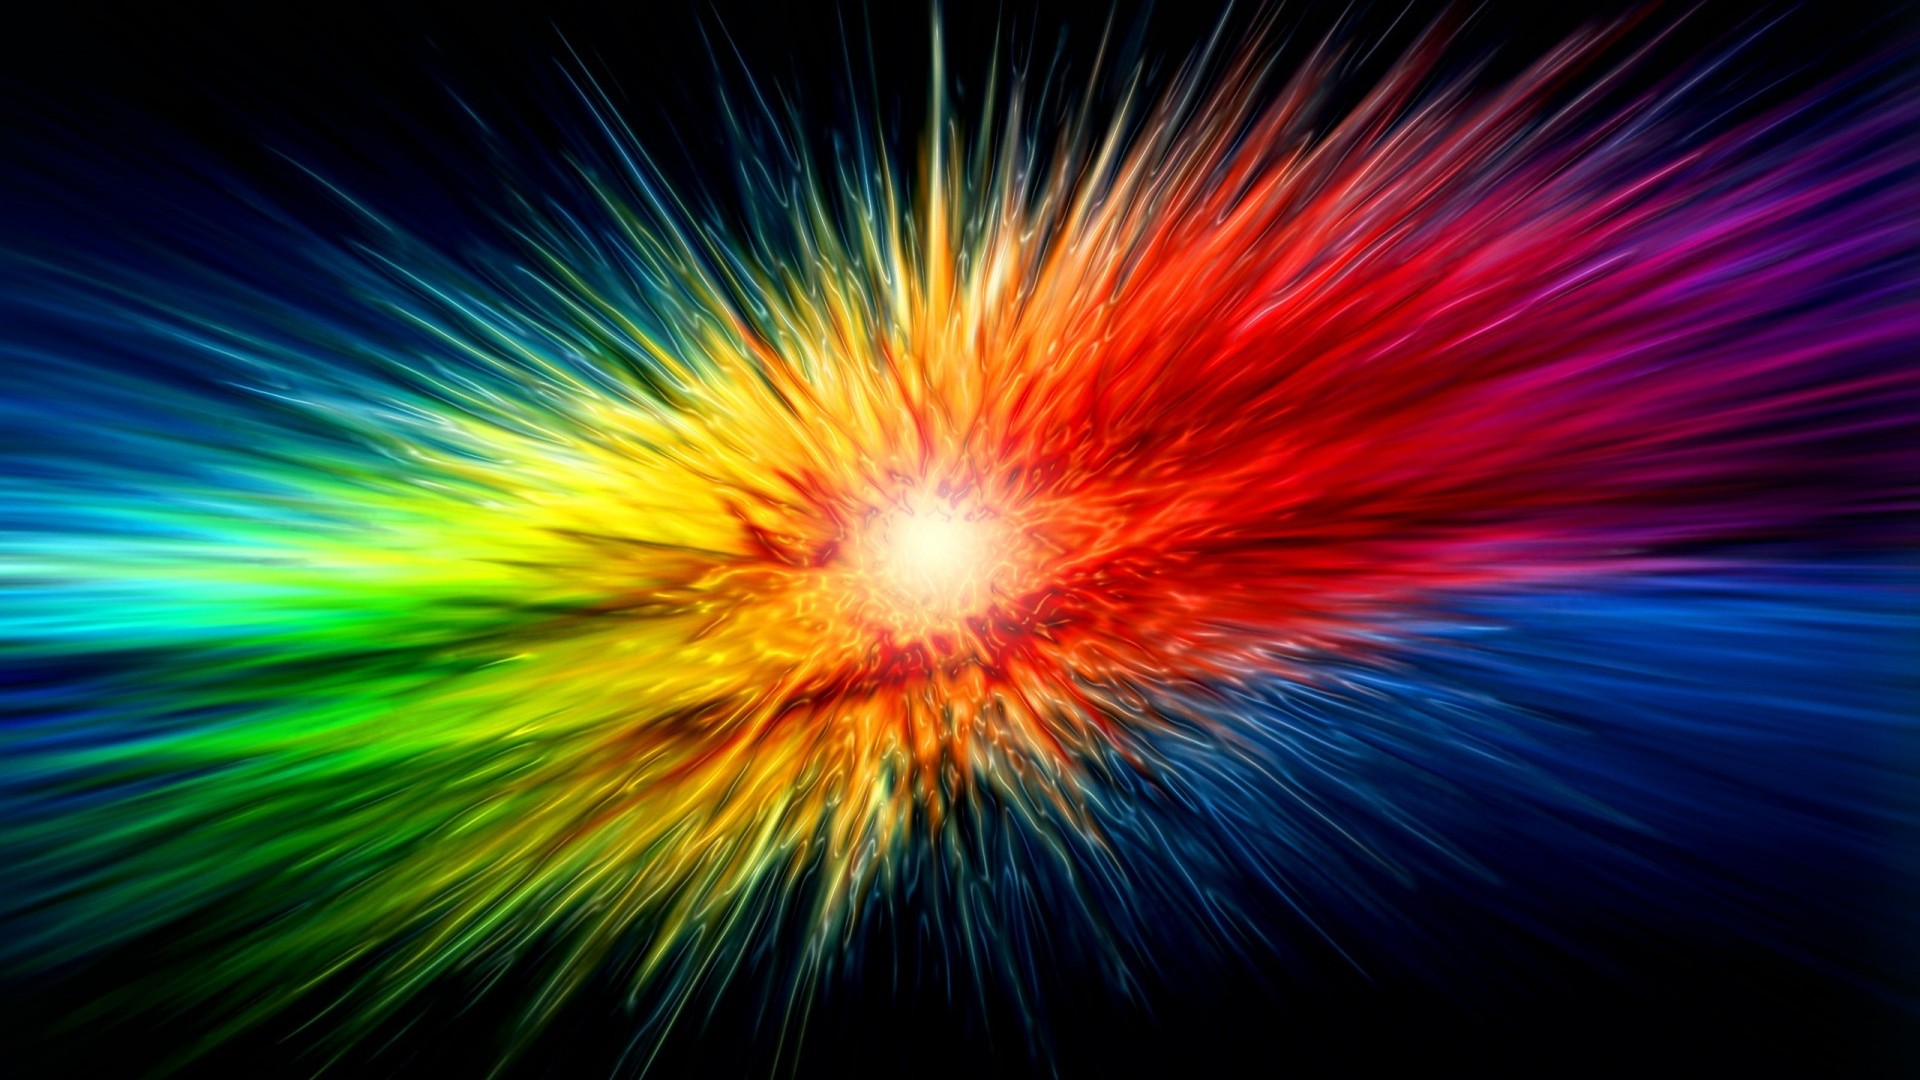 Supernova Rainbow Explosion HD Wallpaper Abstract 3d